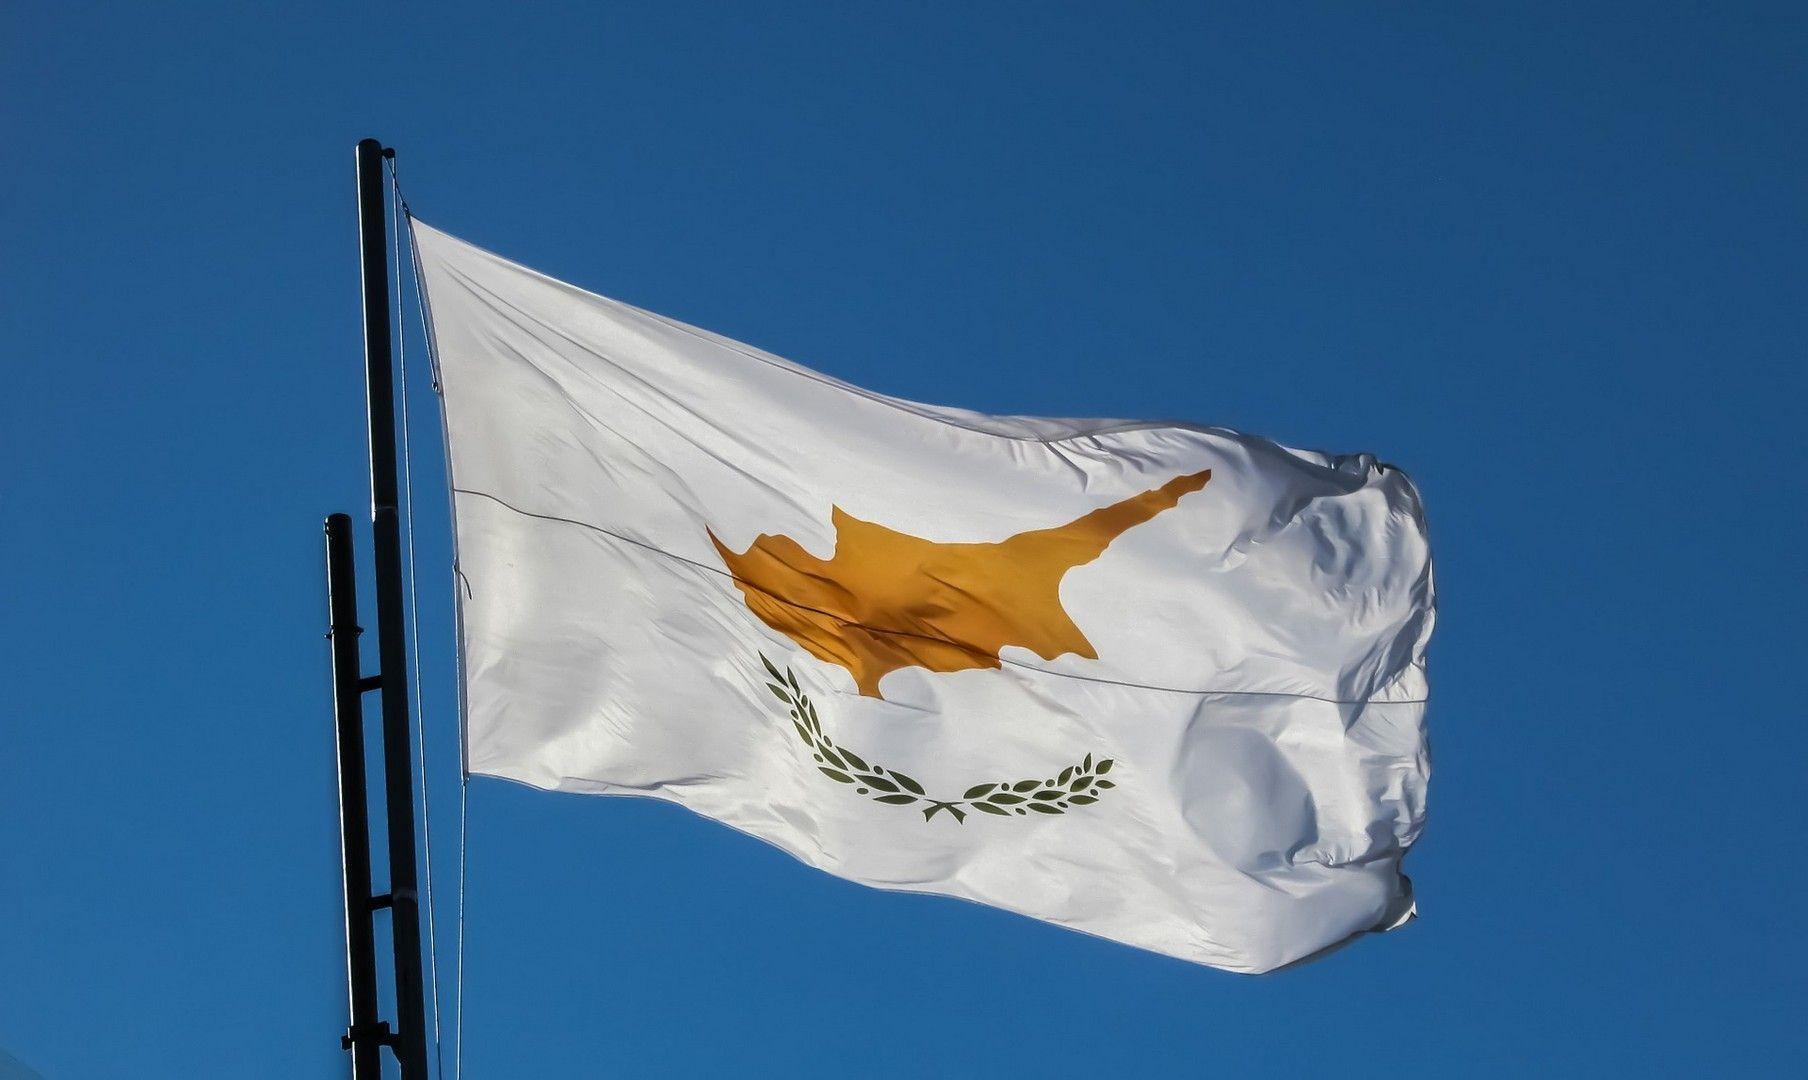 Cyprus Flag wallpapers